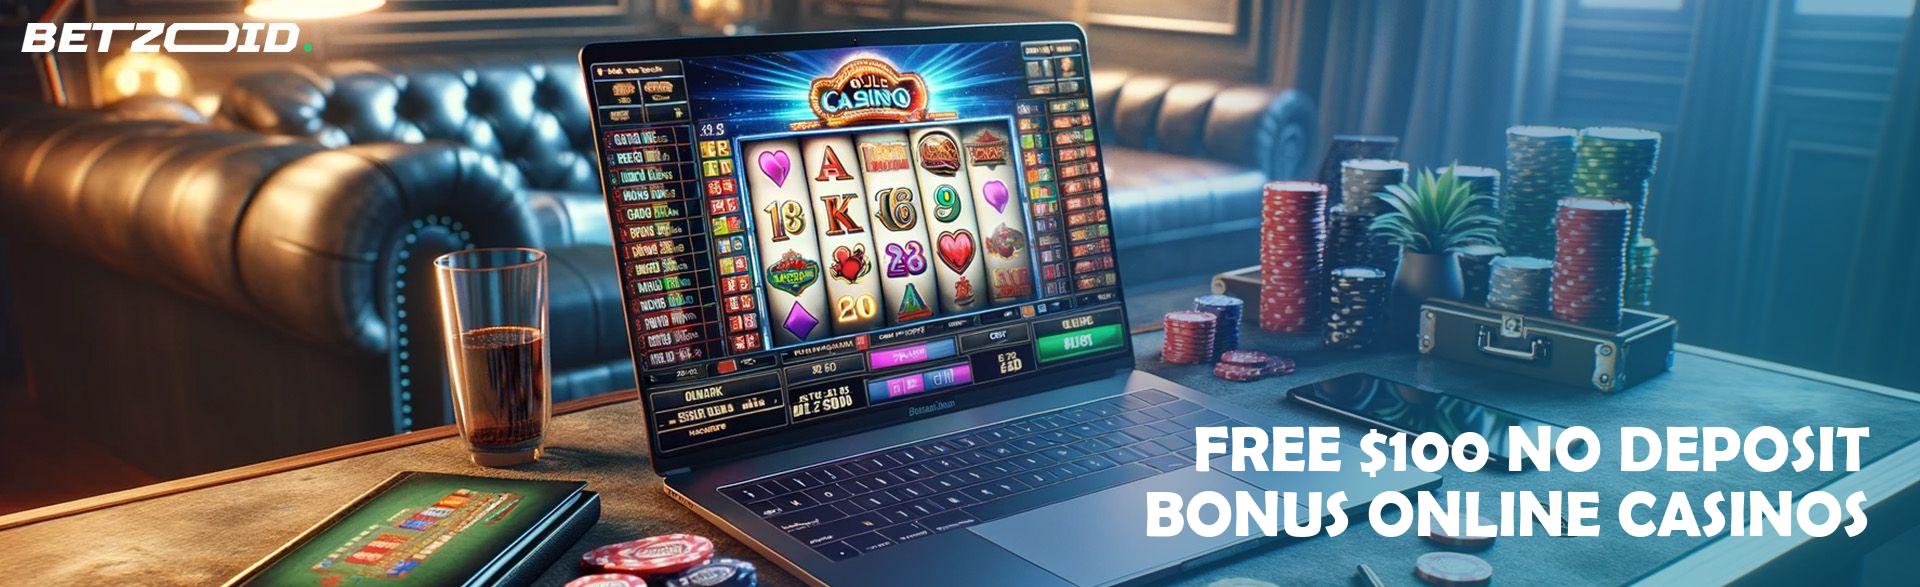 Free $100 No Deposit Bonus Online Casinos.